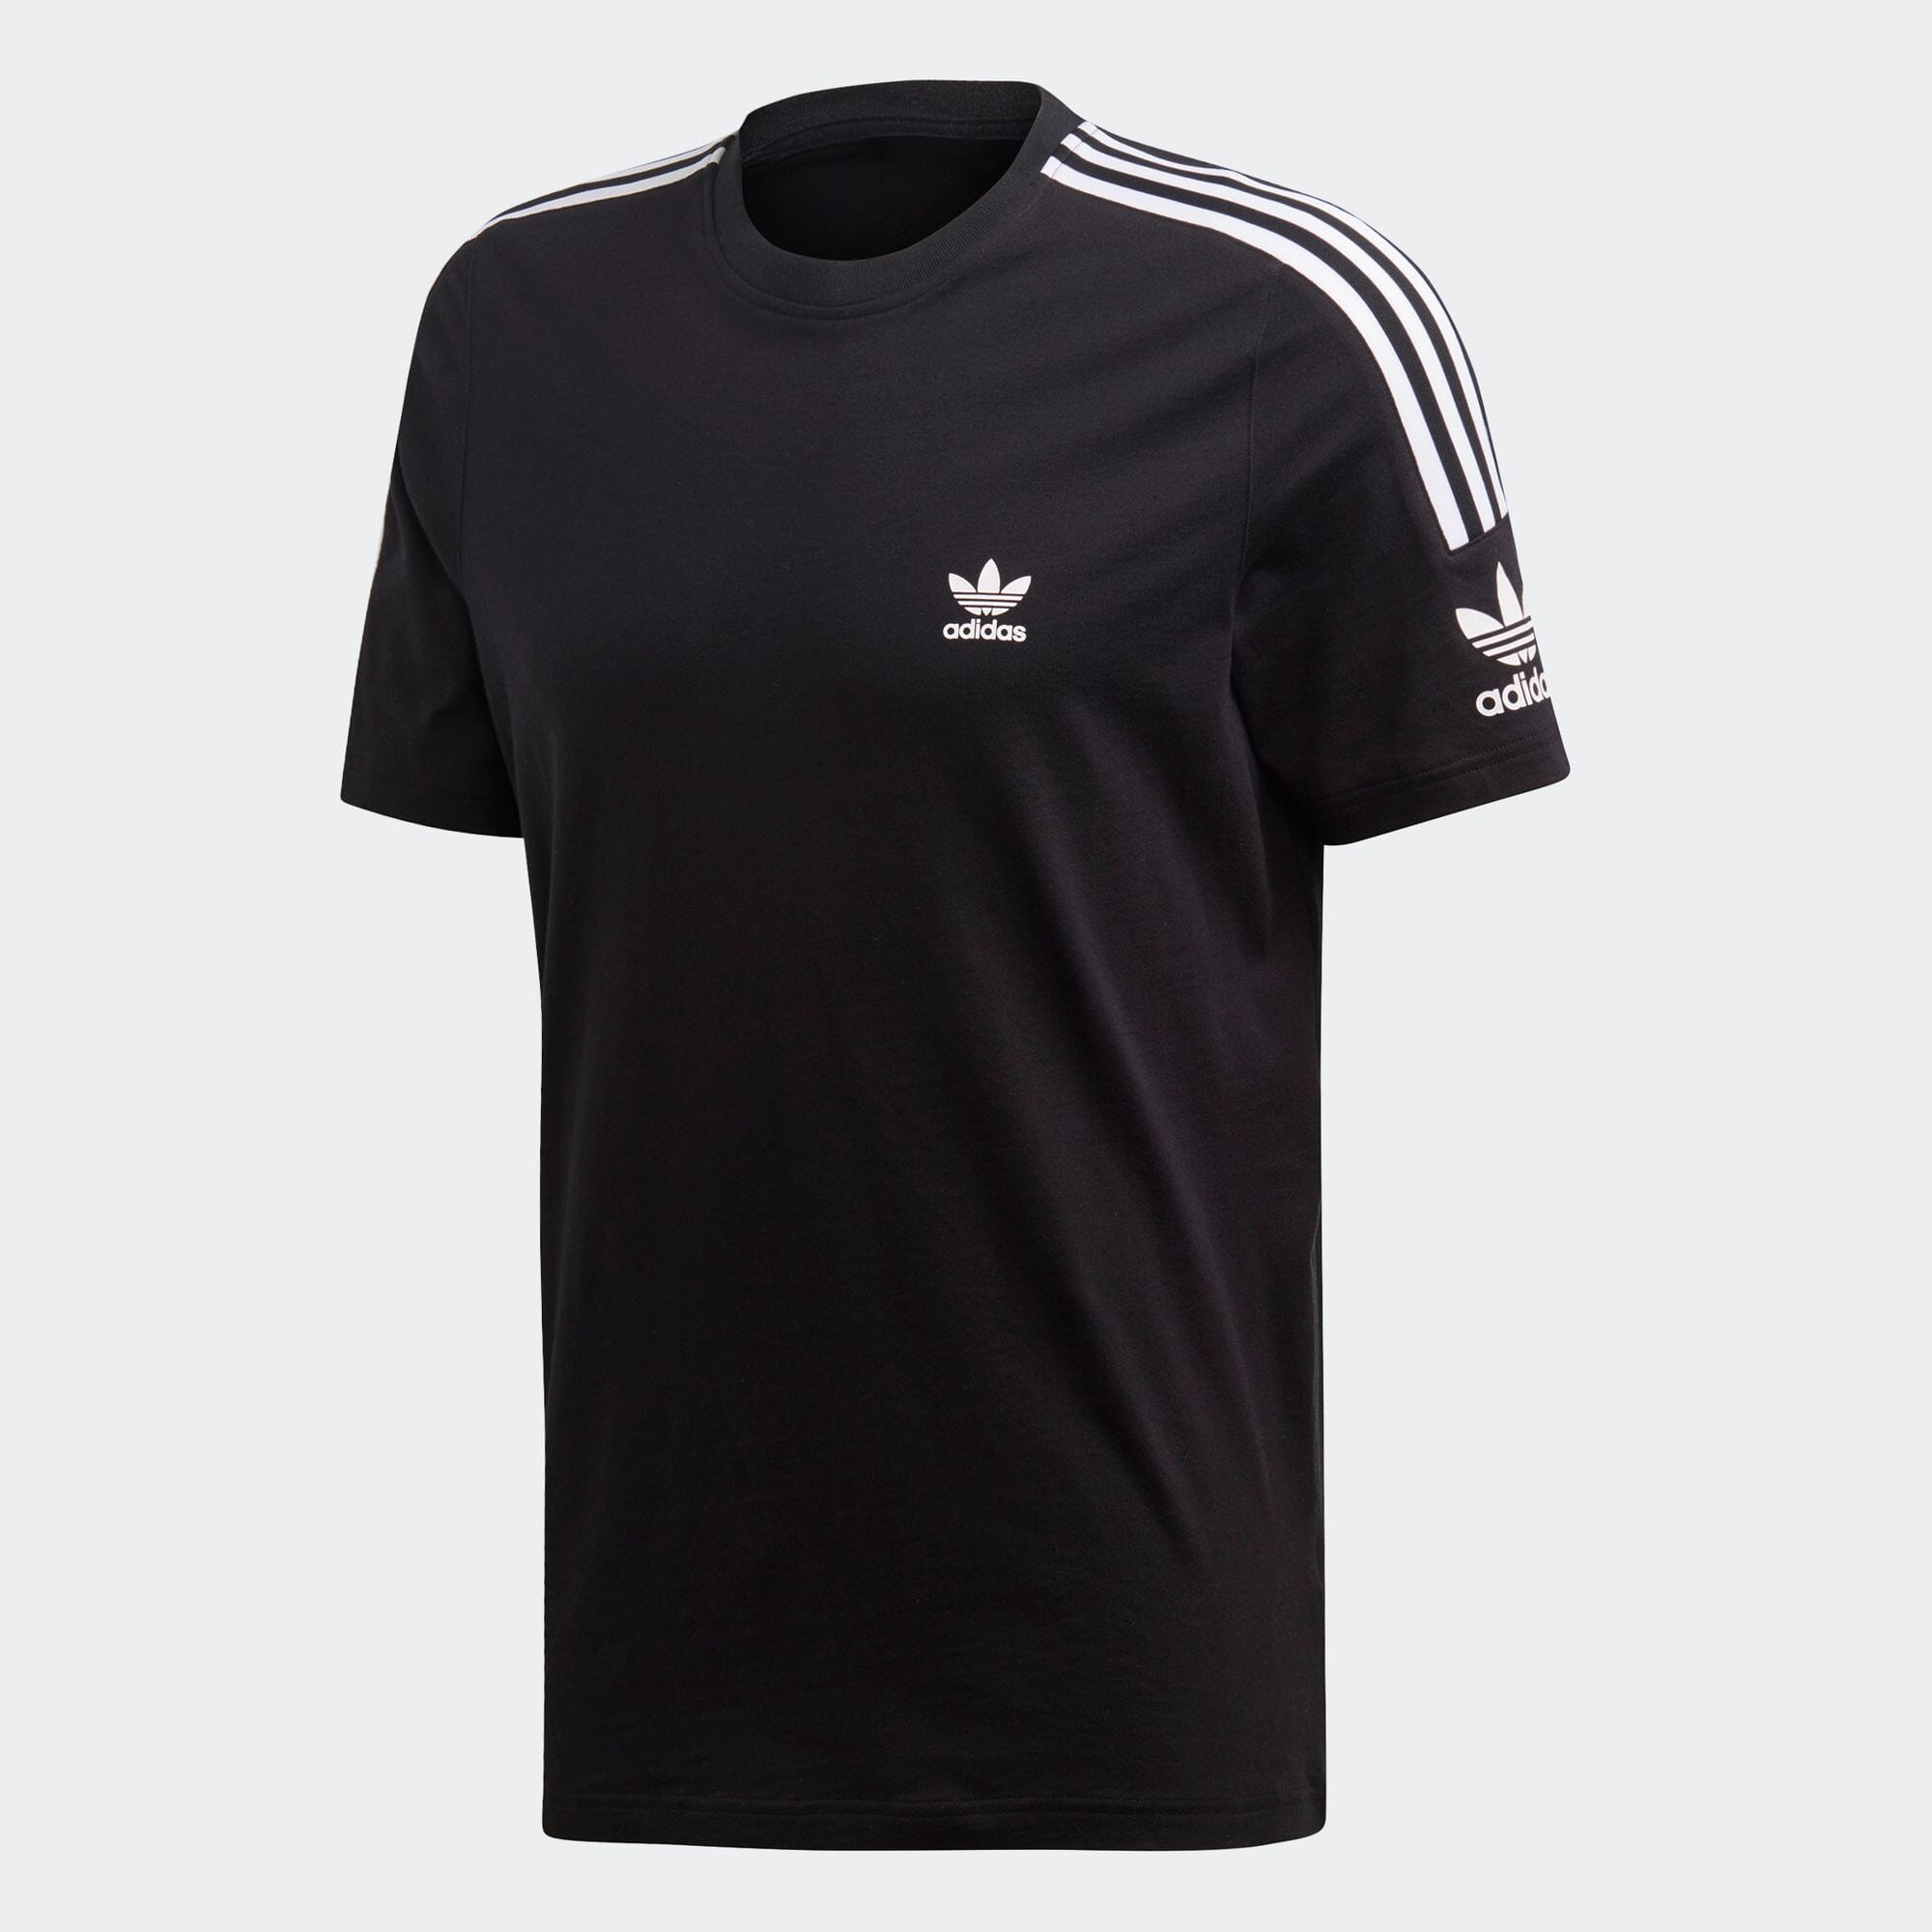 Black S NoName T-shirt discount 68% WOMEN FASHION Shirts & T-shirts Sports 